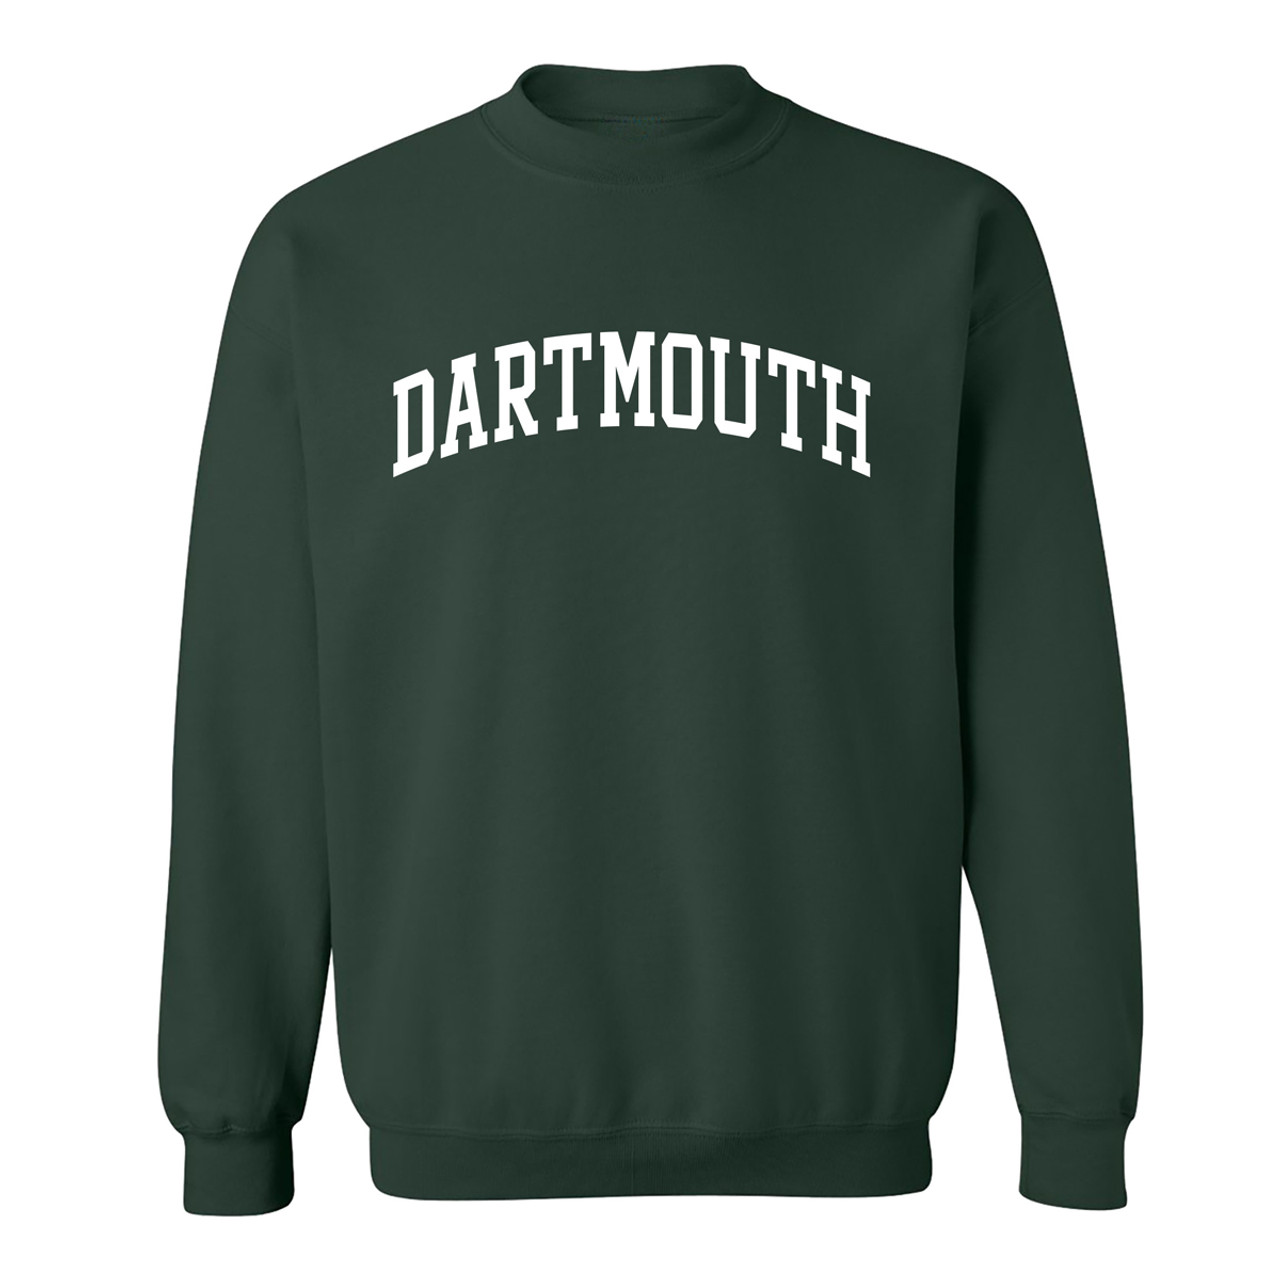 Dartmouth midweight crew, Dartmouth sweatshirt